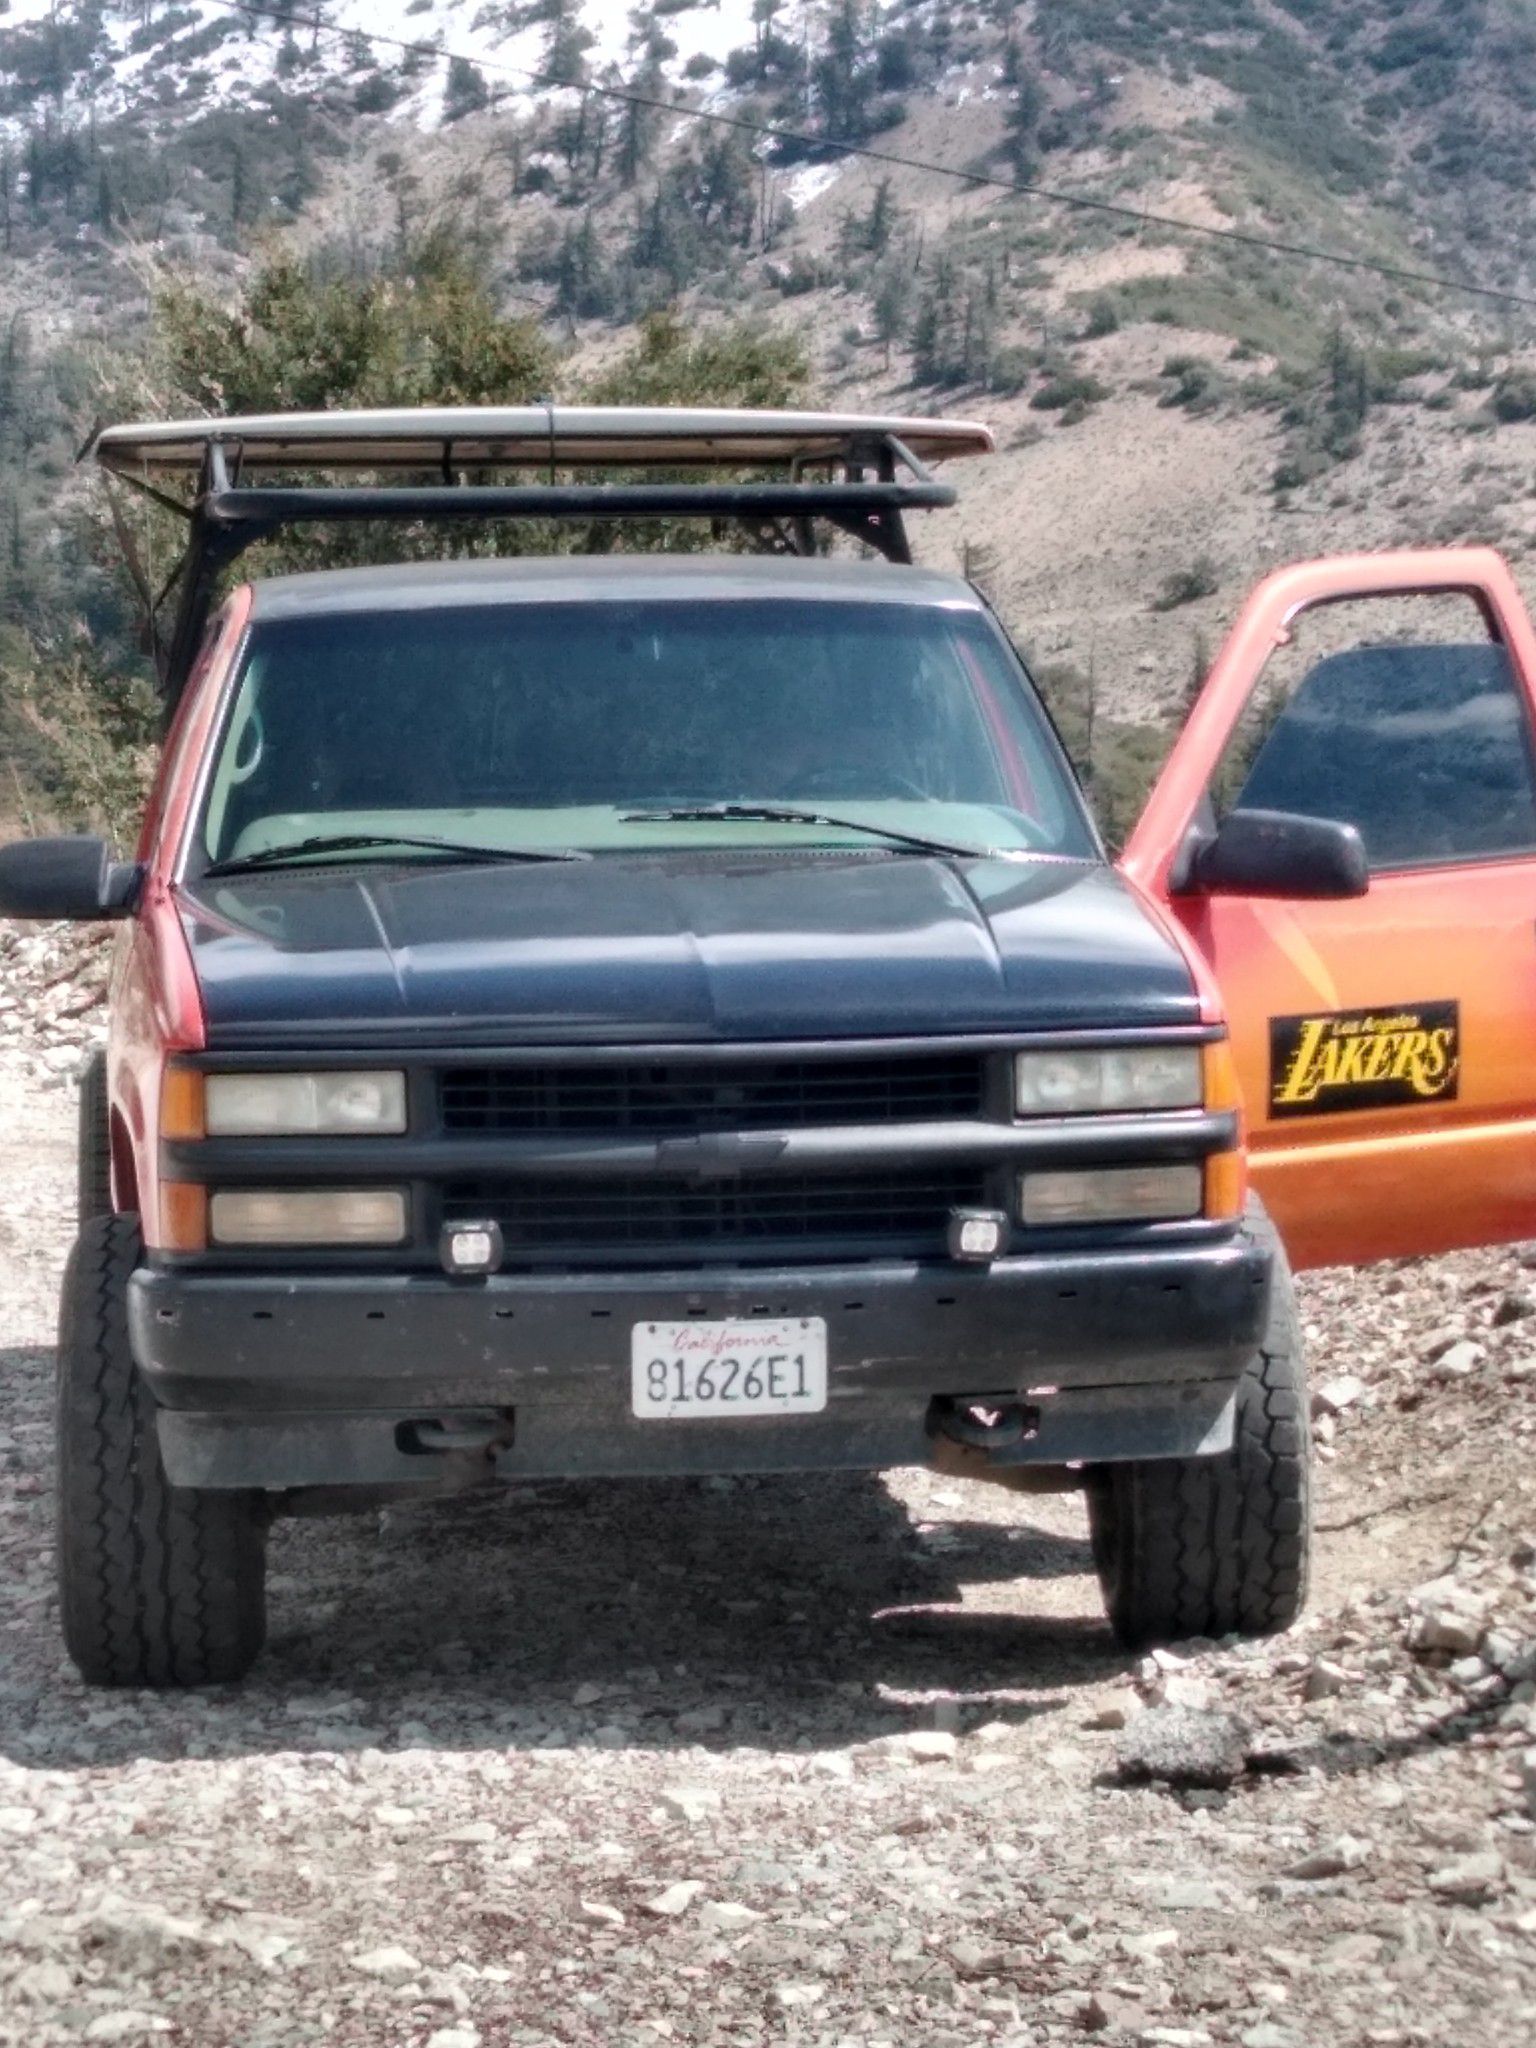 1998 Chevy truck